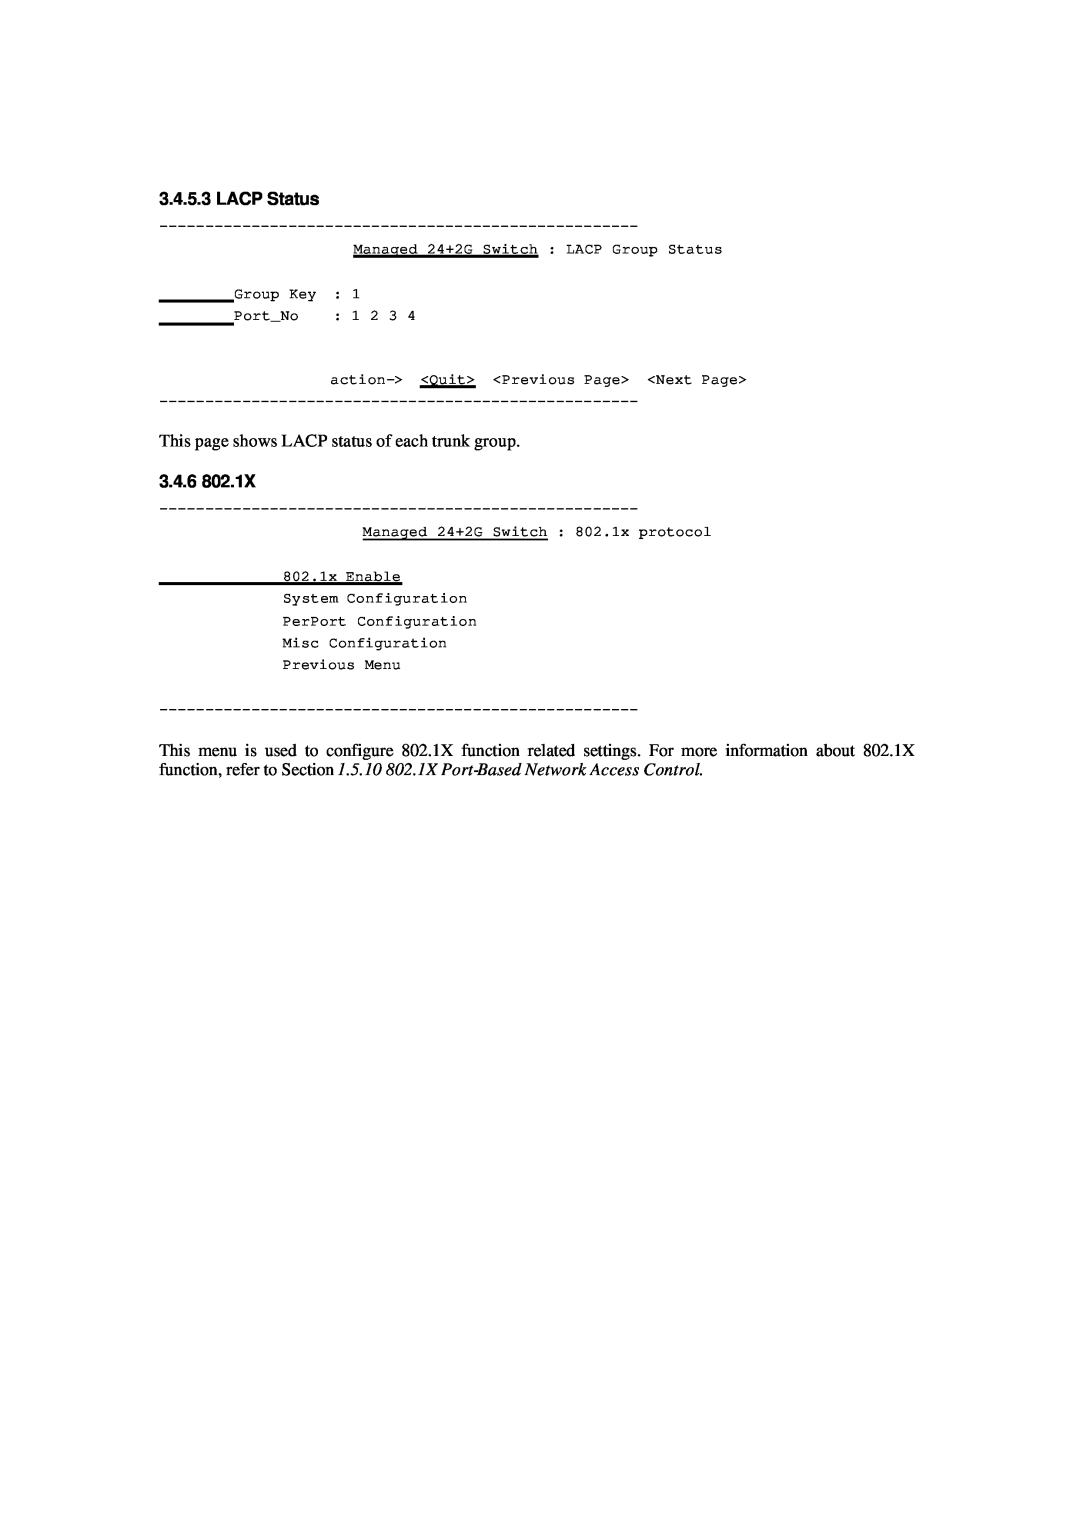 Xerox NS-2260 operation manual LACP Status, 3.4.6 